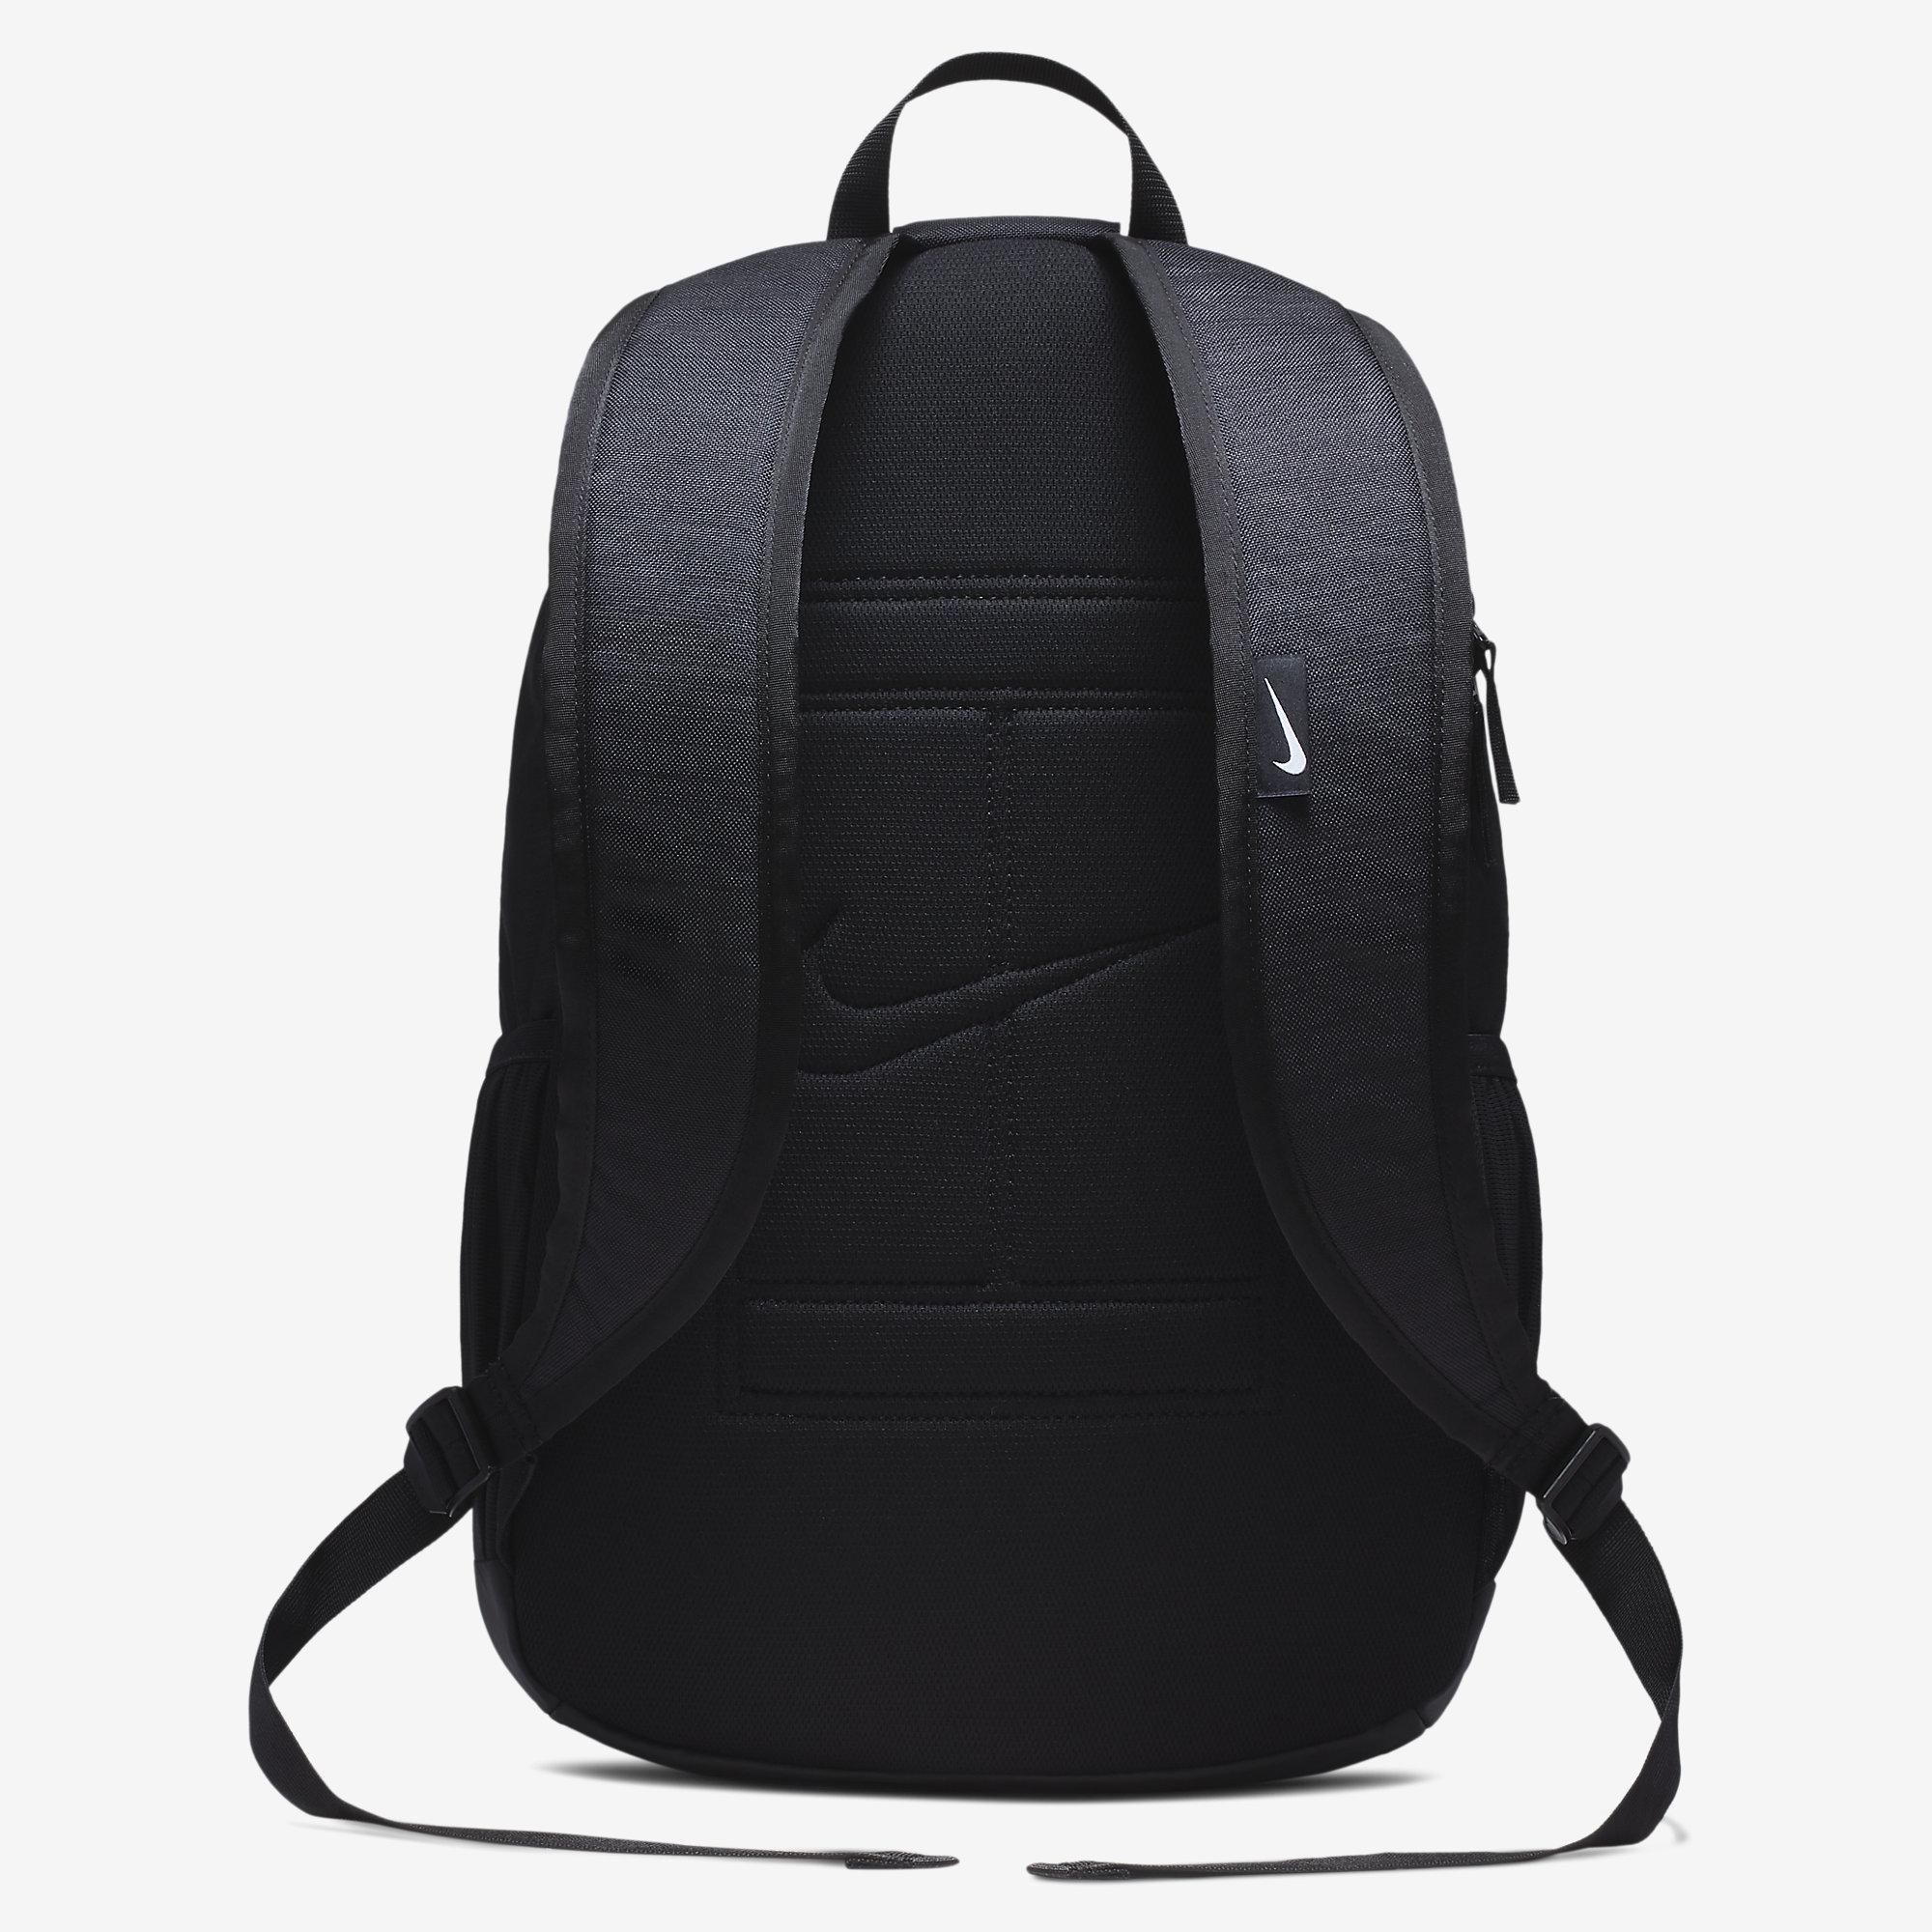 Nike Tennis Backpack - Black/White - Tennisnuts.com